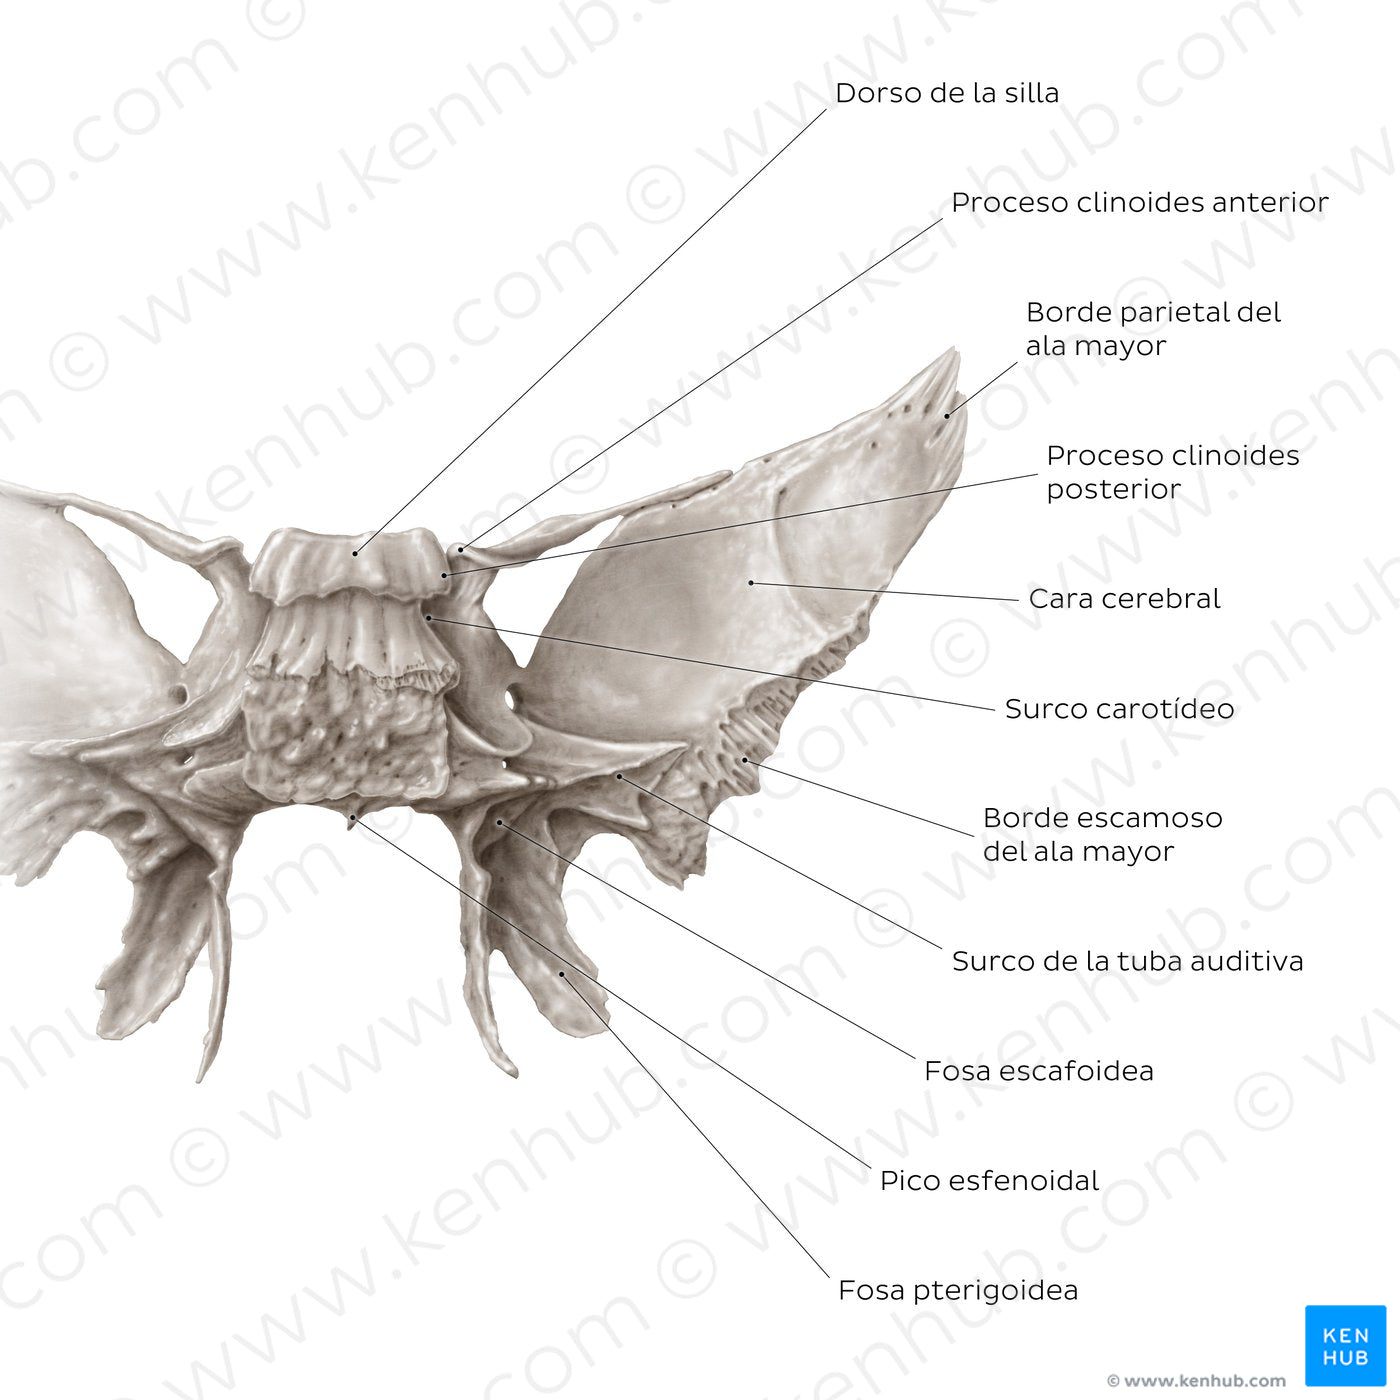 Sphenoid bone (posterior view) (Spanish)